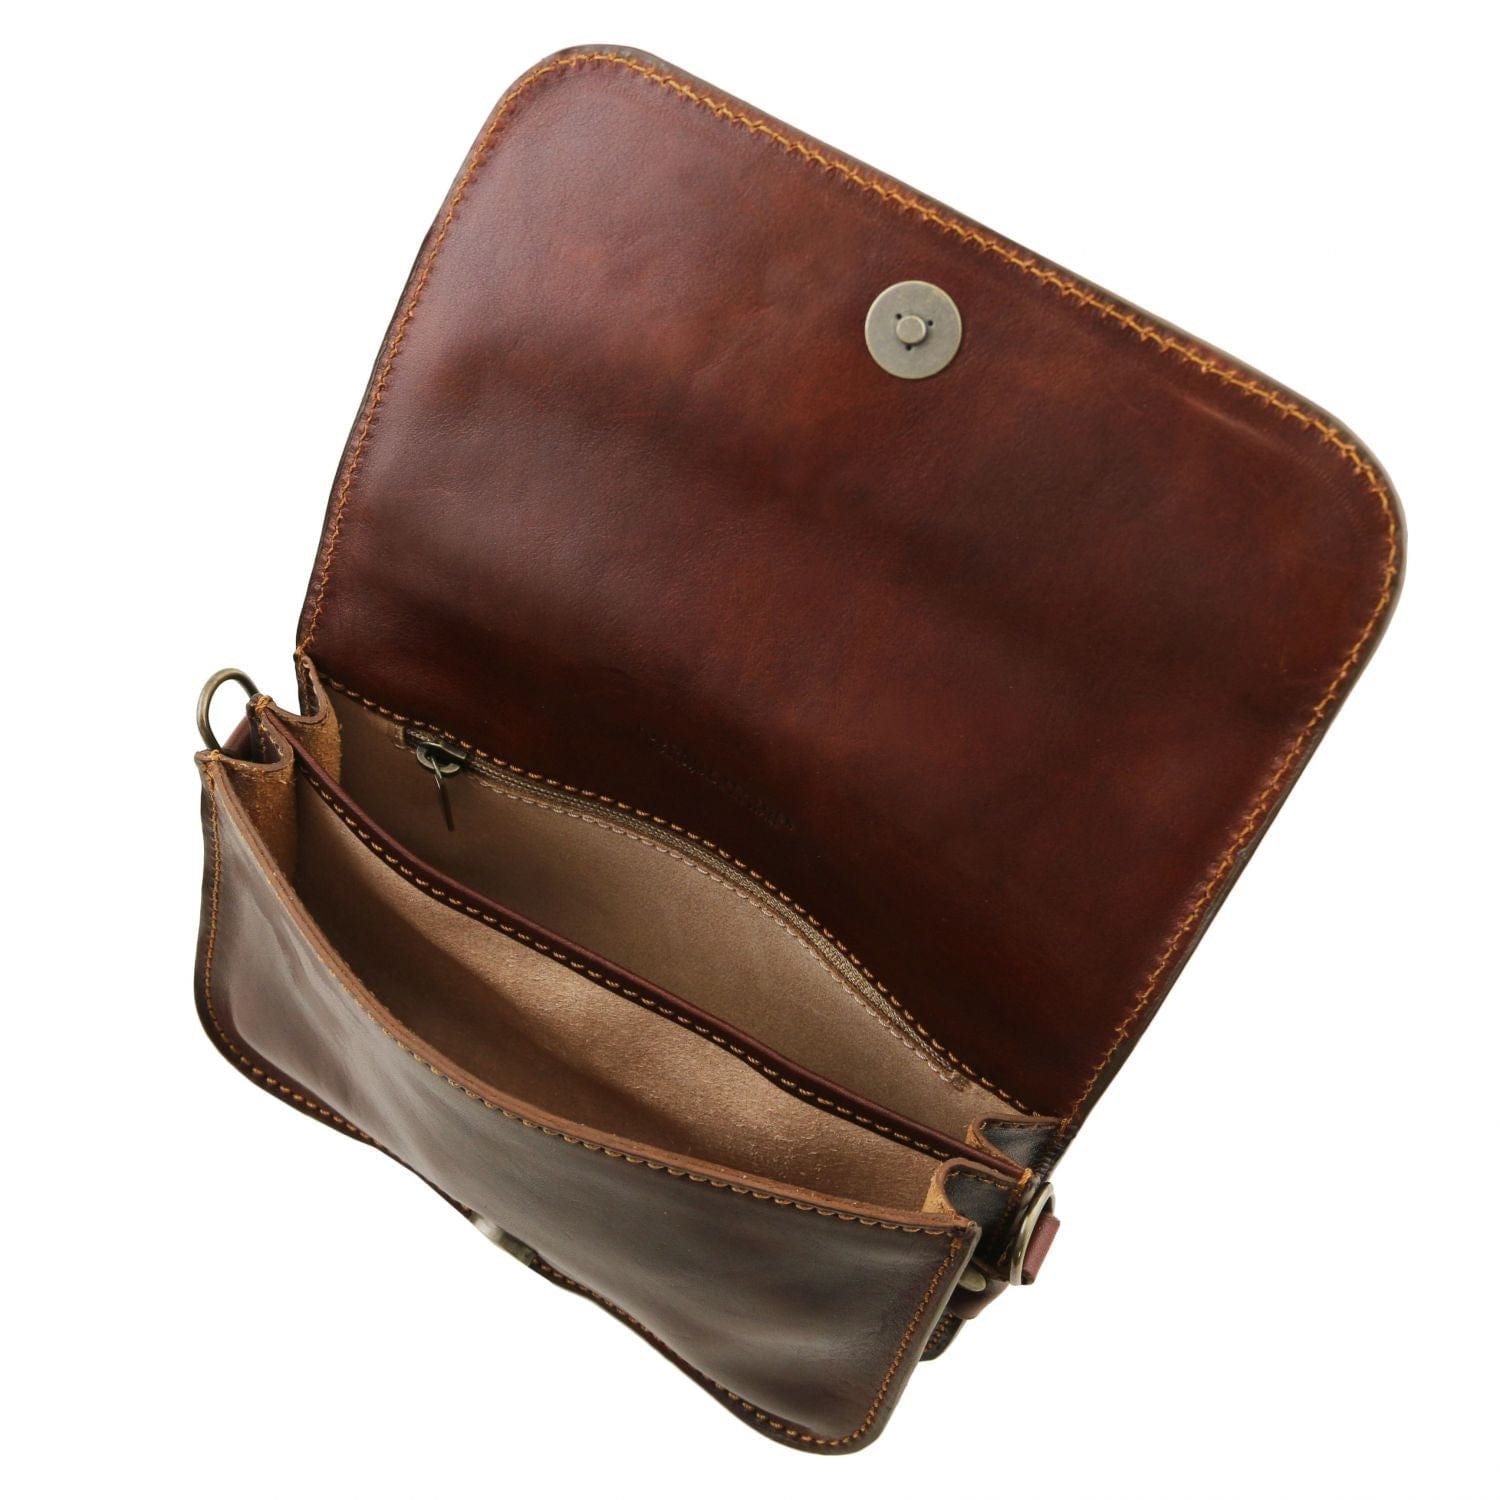 Carmen - Leather shoulder bag with flap | TL141713 - Premium Leather shoulder bags - Shop now at San Rocco Italia